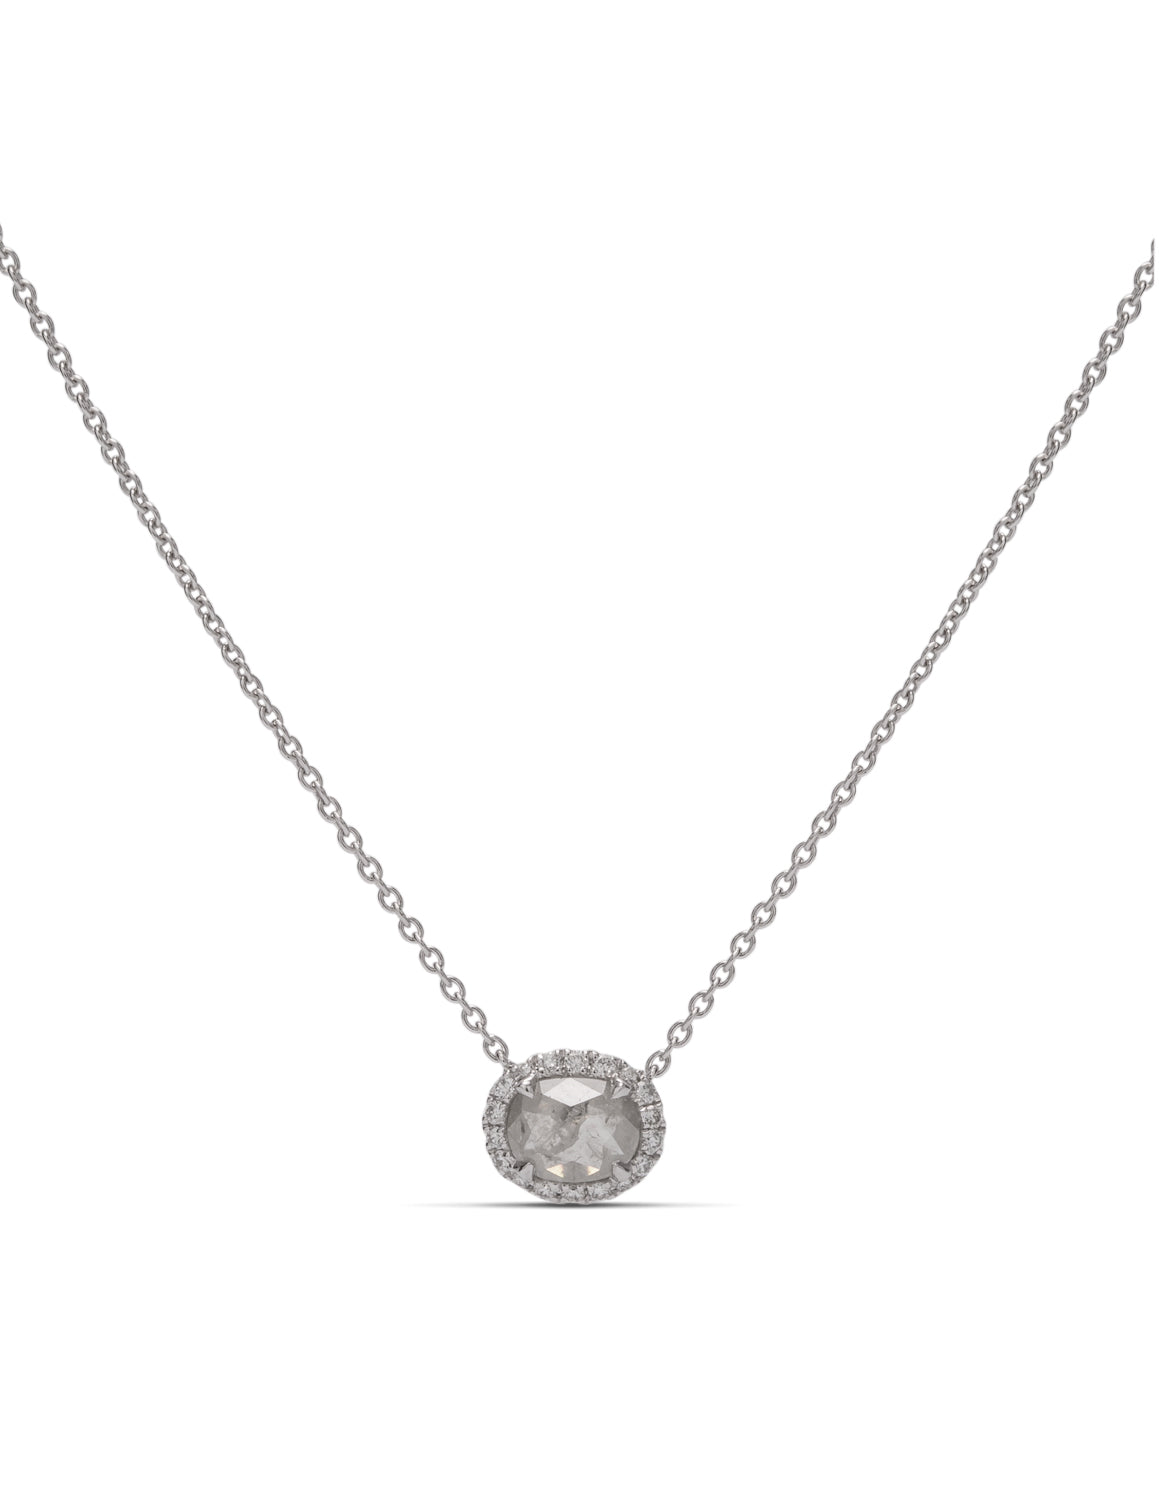 Rough Grey Diamond Necklace - Charles Koll Jewellers